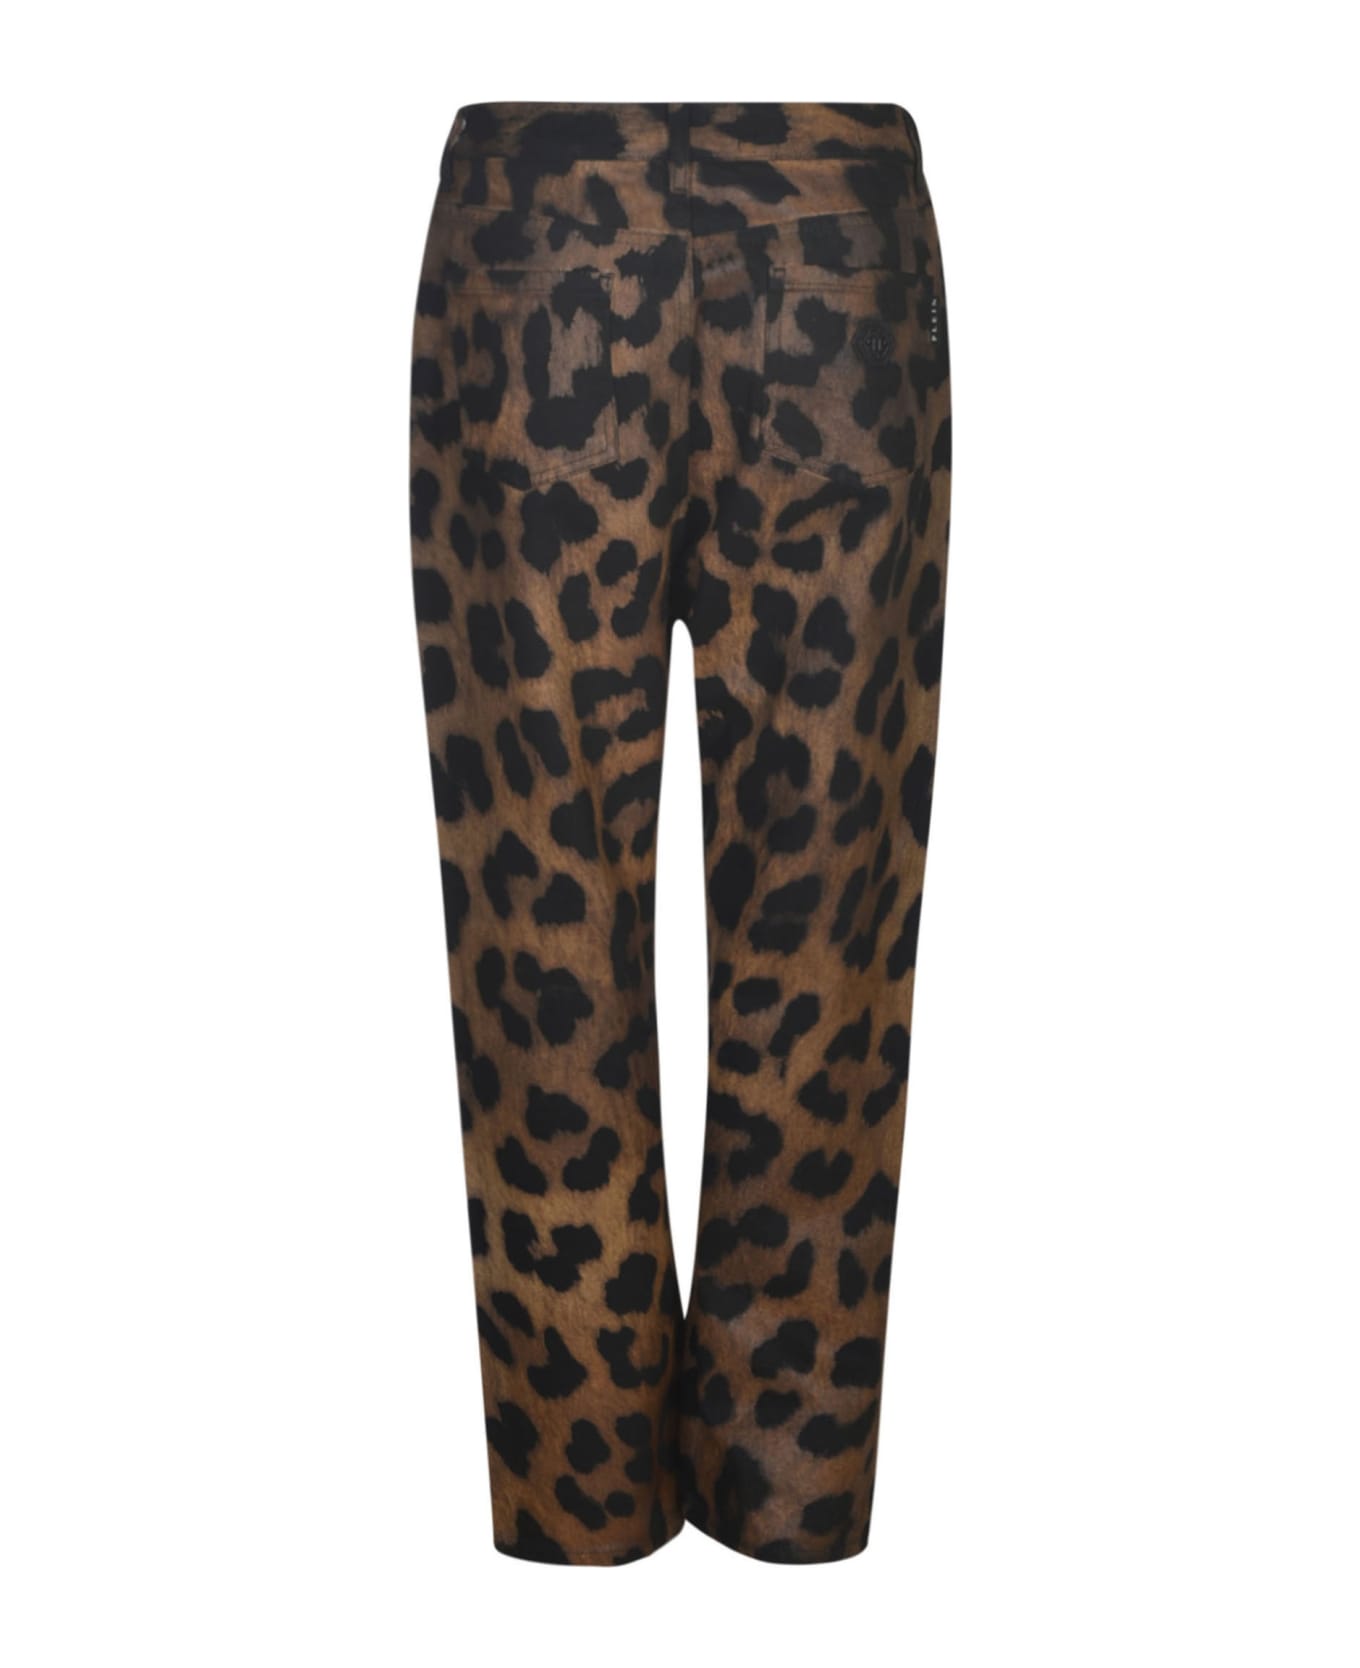 Philipp Plein Animal Print Trousers - Leopard